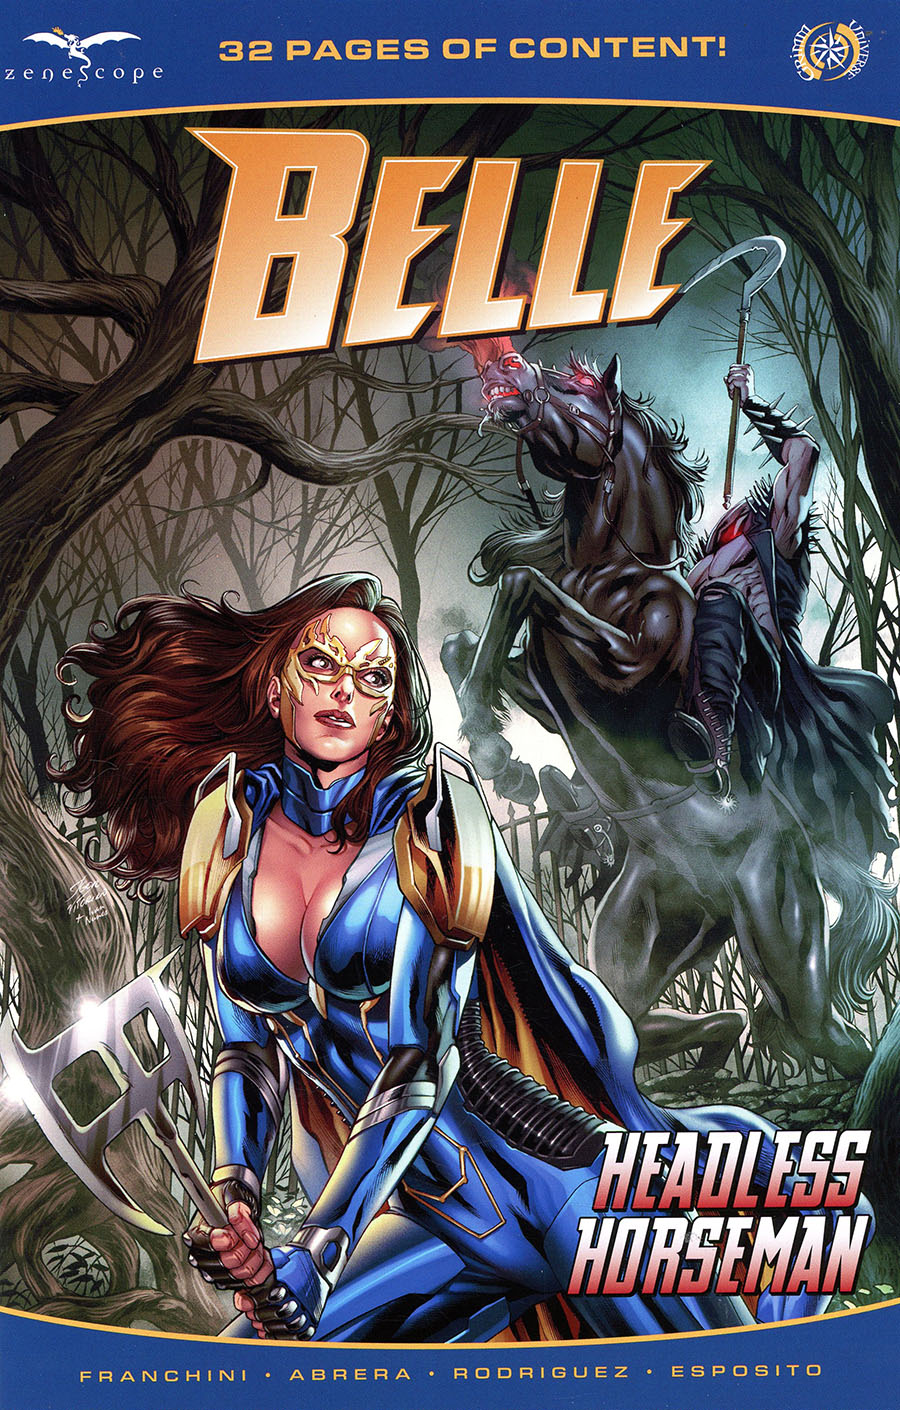 Grimm Fairy Tales Presents Belle Headless Horseman #1 (One Shot) Cover A Igor Vitorino